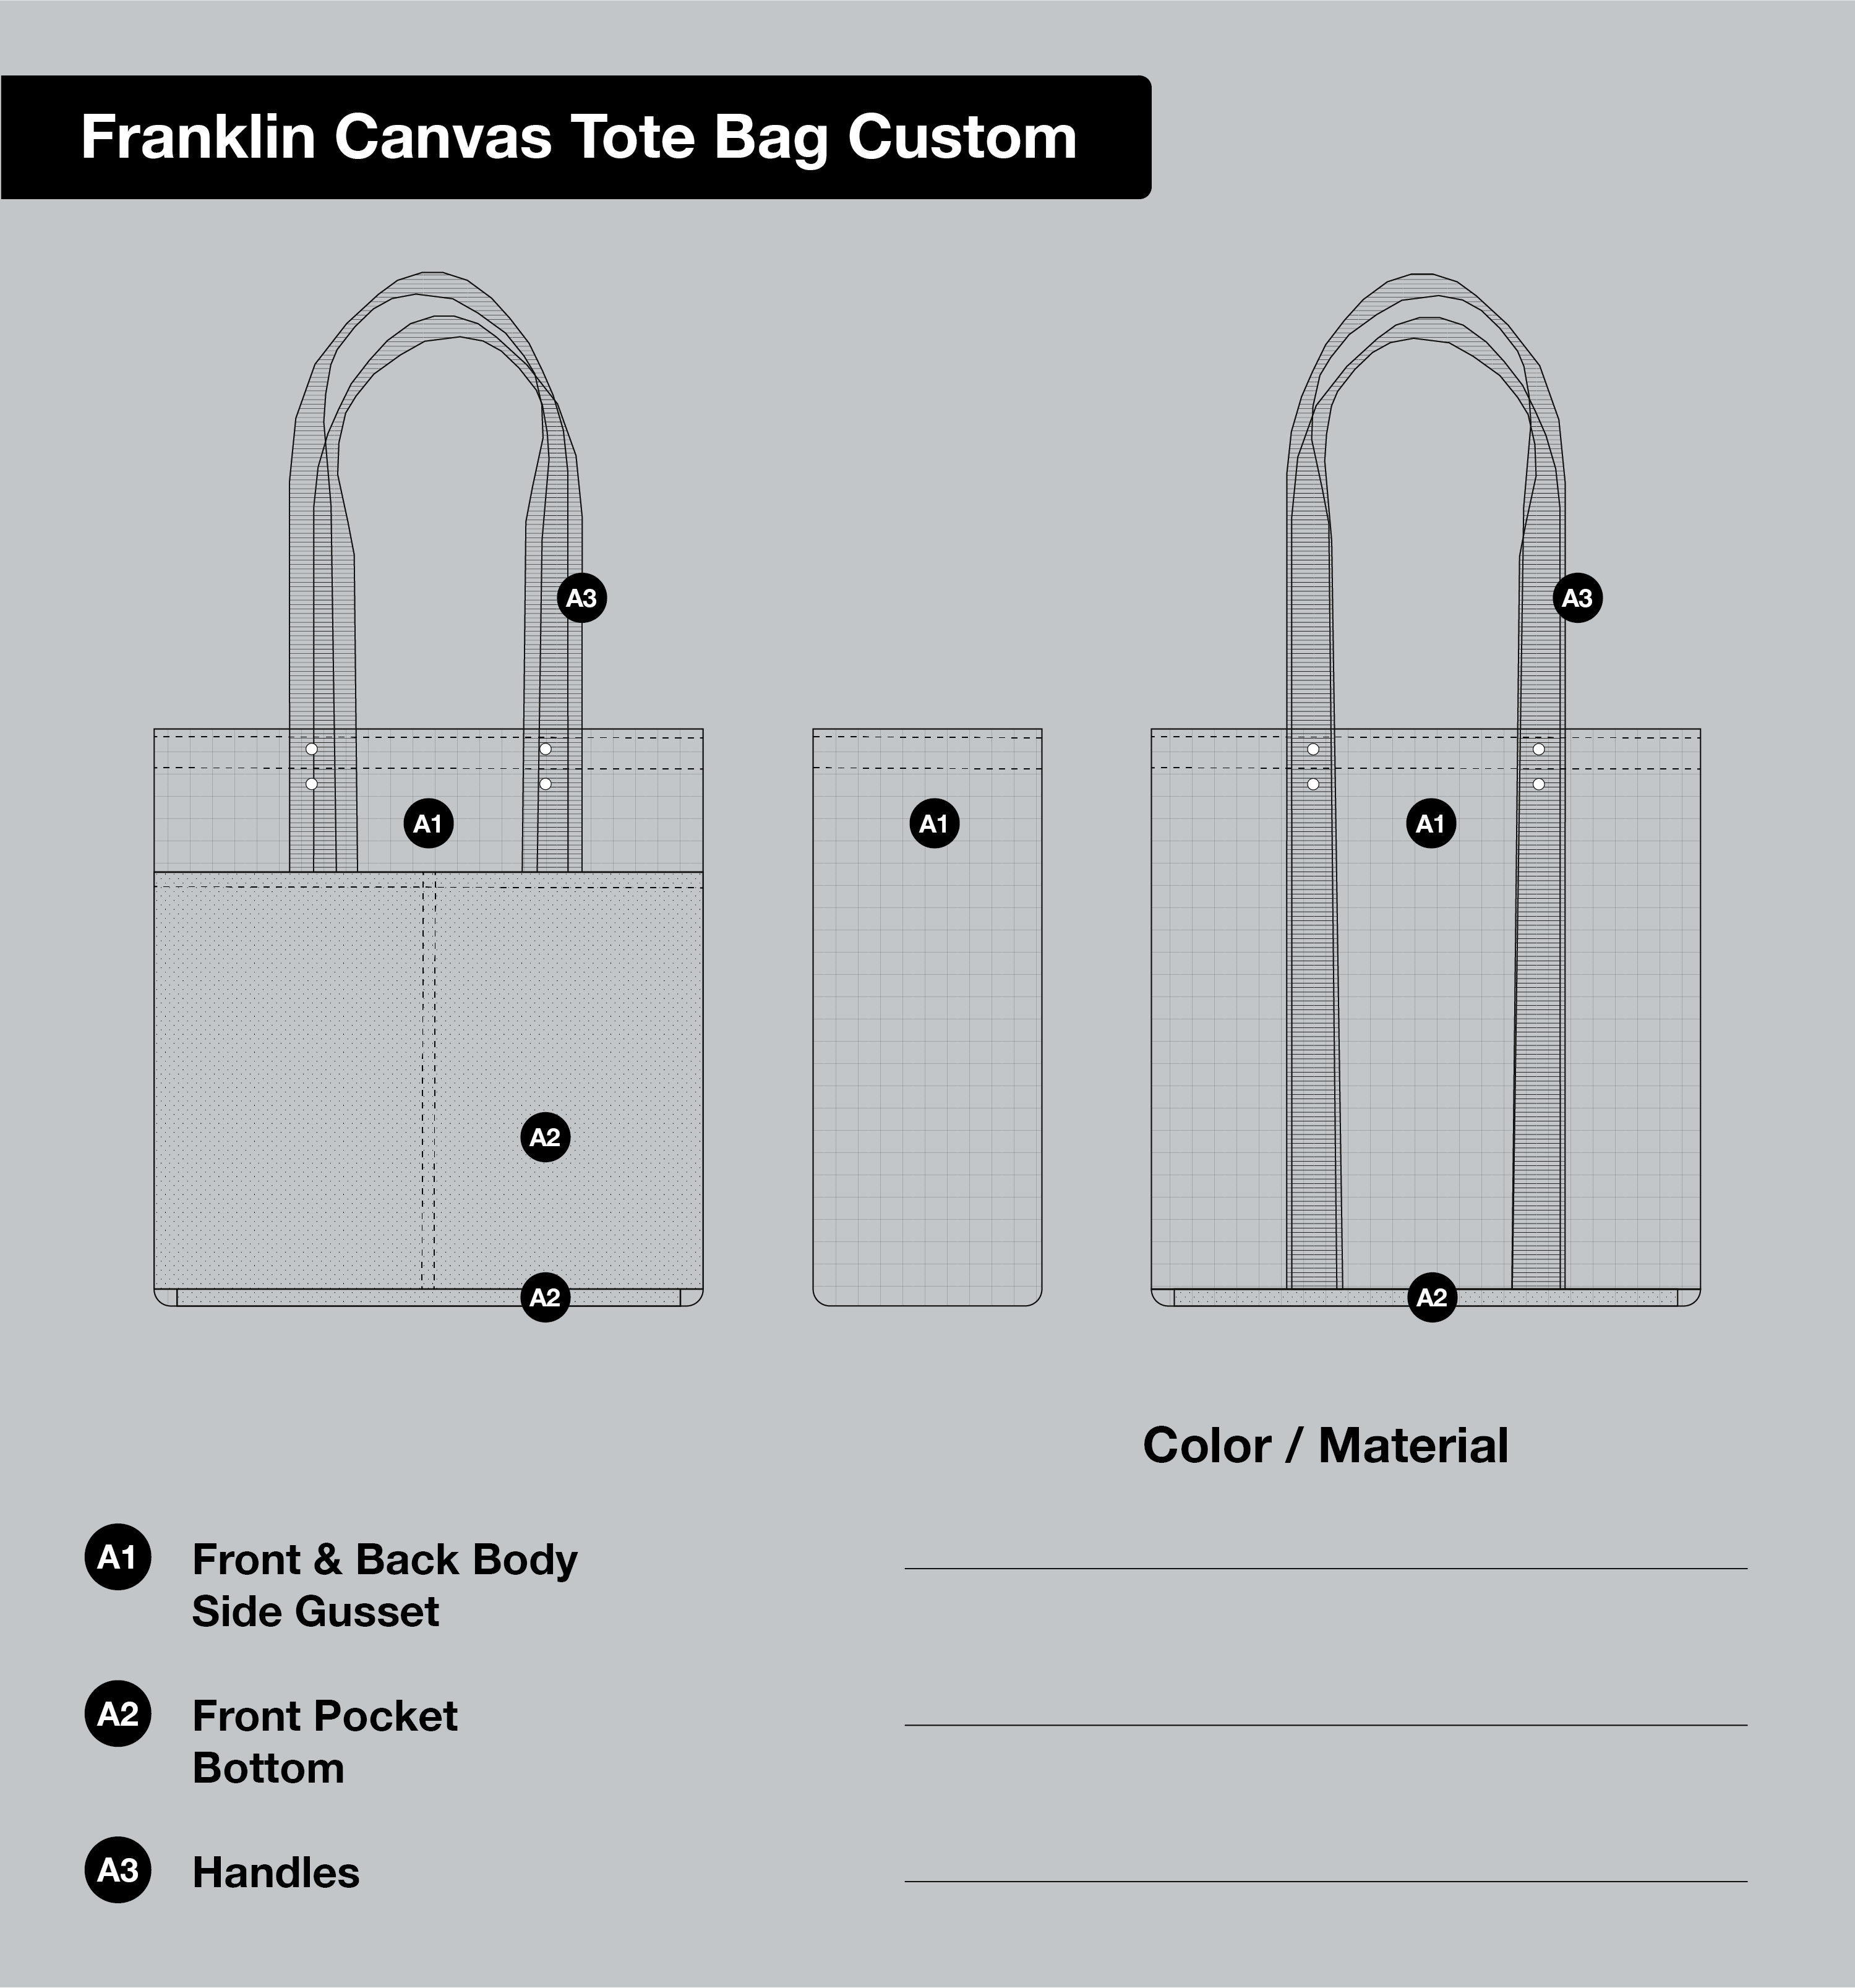 Franklin Canvas Tote Bag Custom